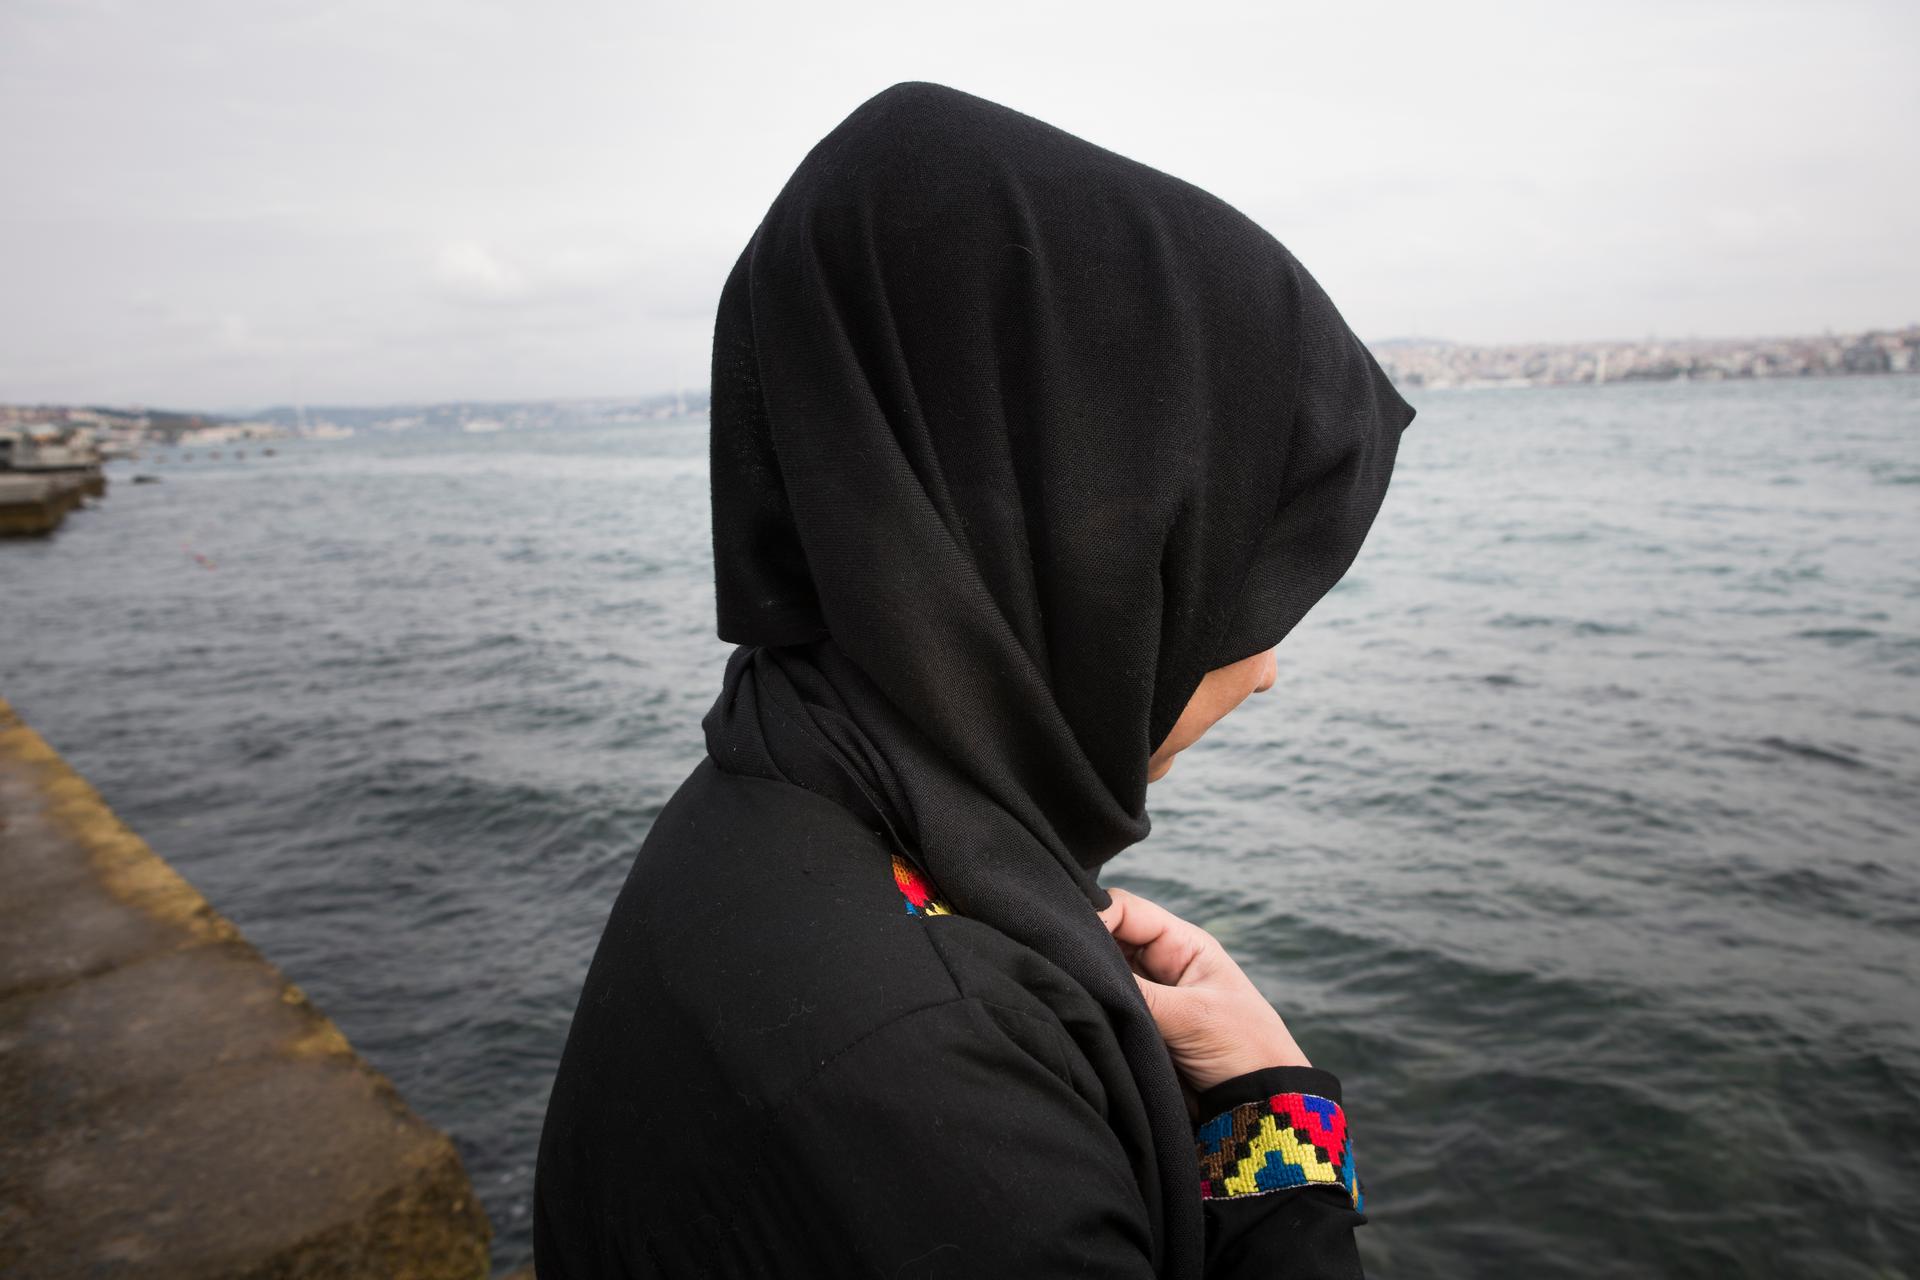 Hoor, 16, arrived in Istanbul in late June